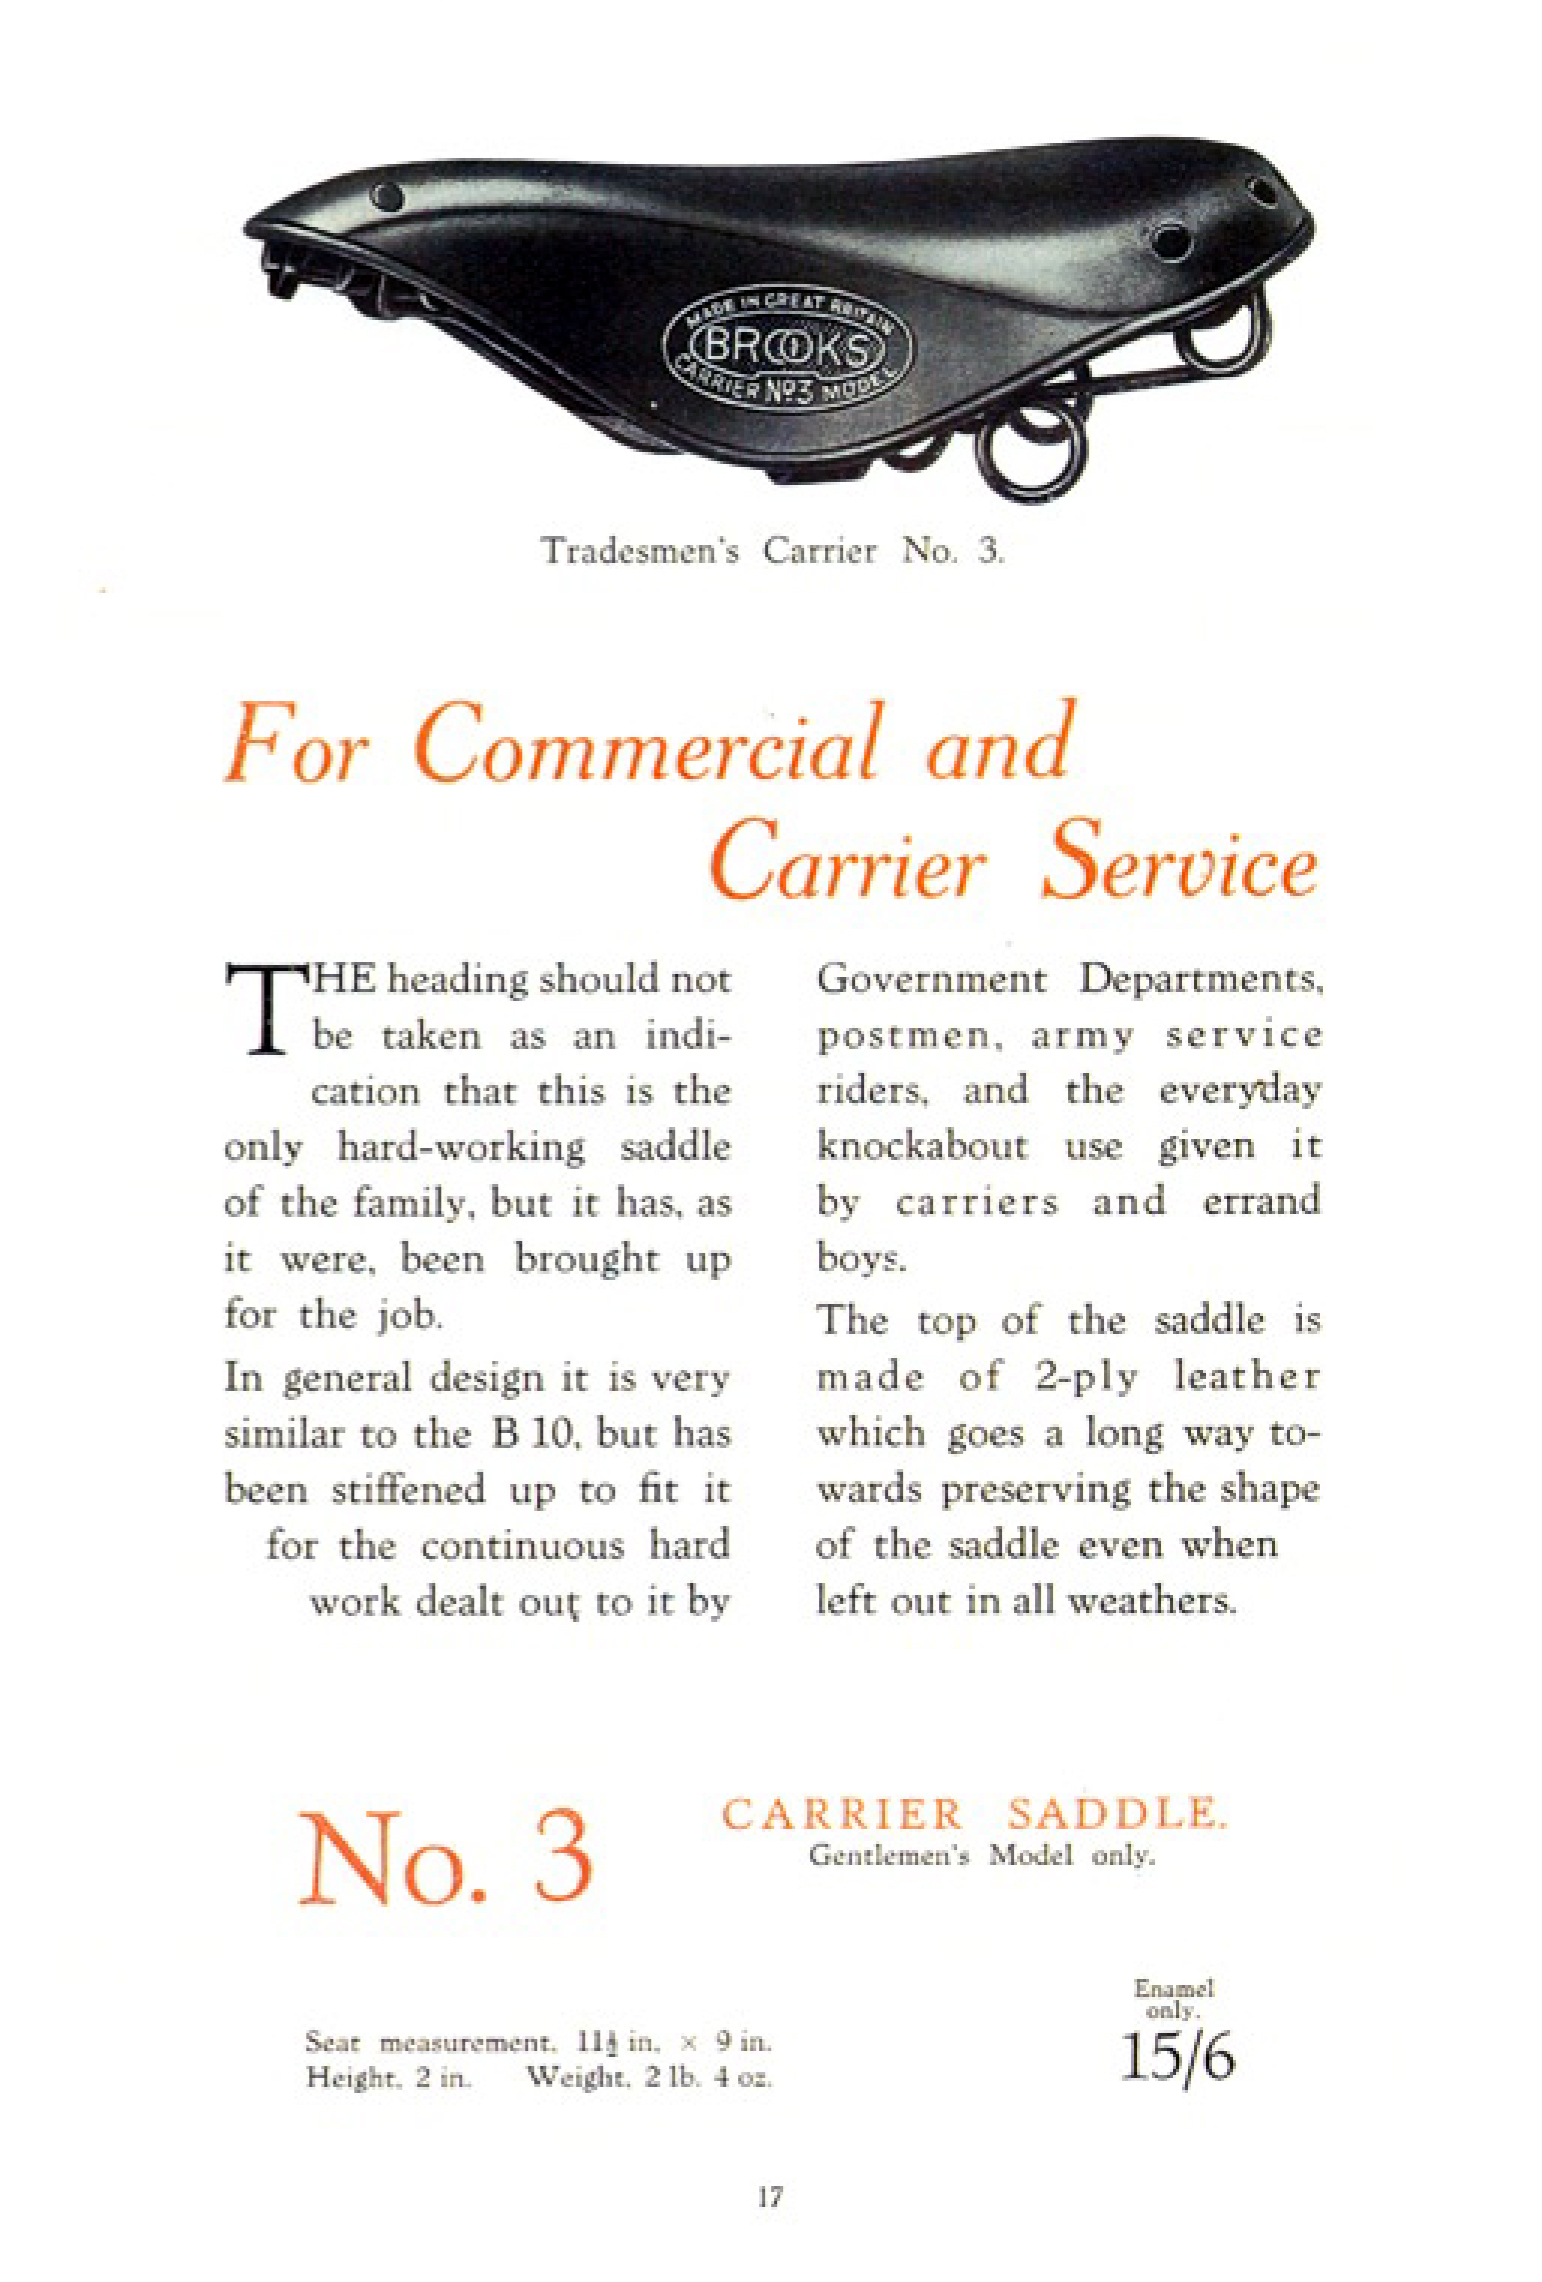 ebykr-brooks-no-3-commercial-carrier-service-saddle-1927-catalog-page-17